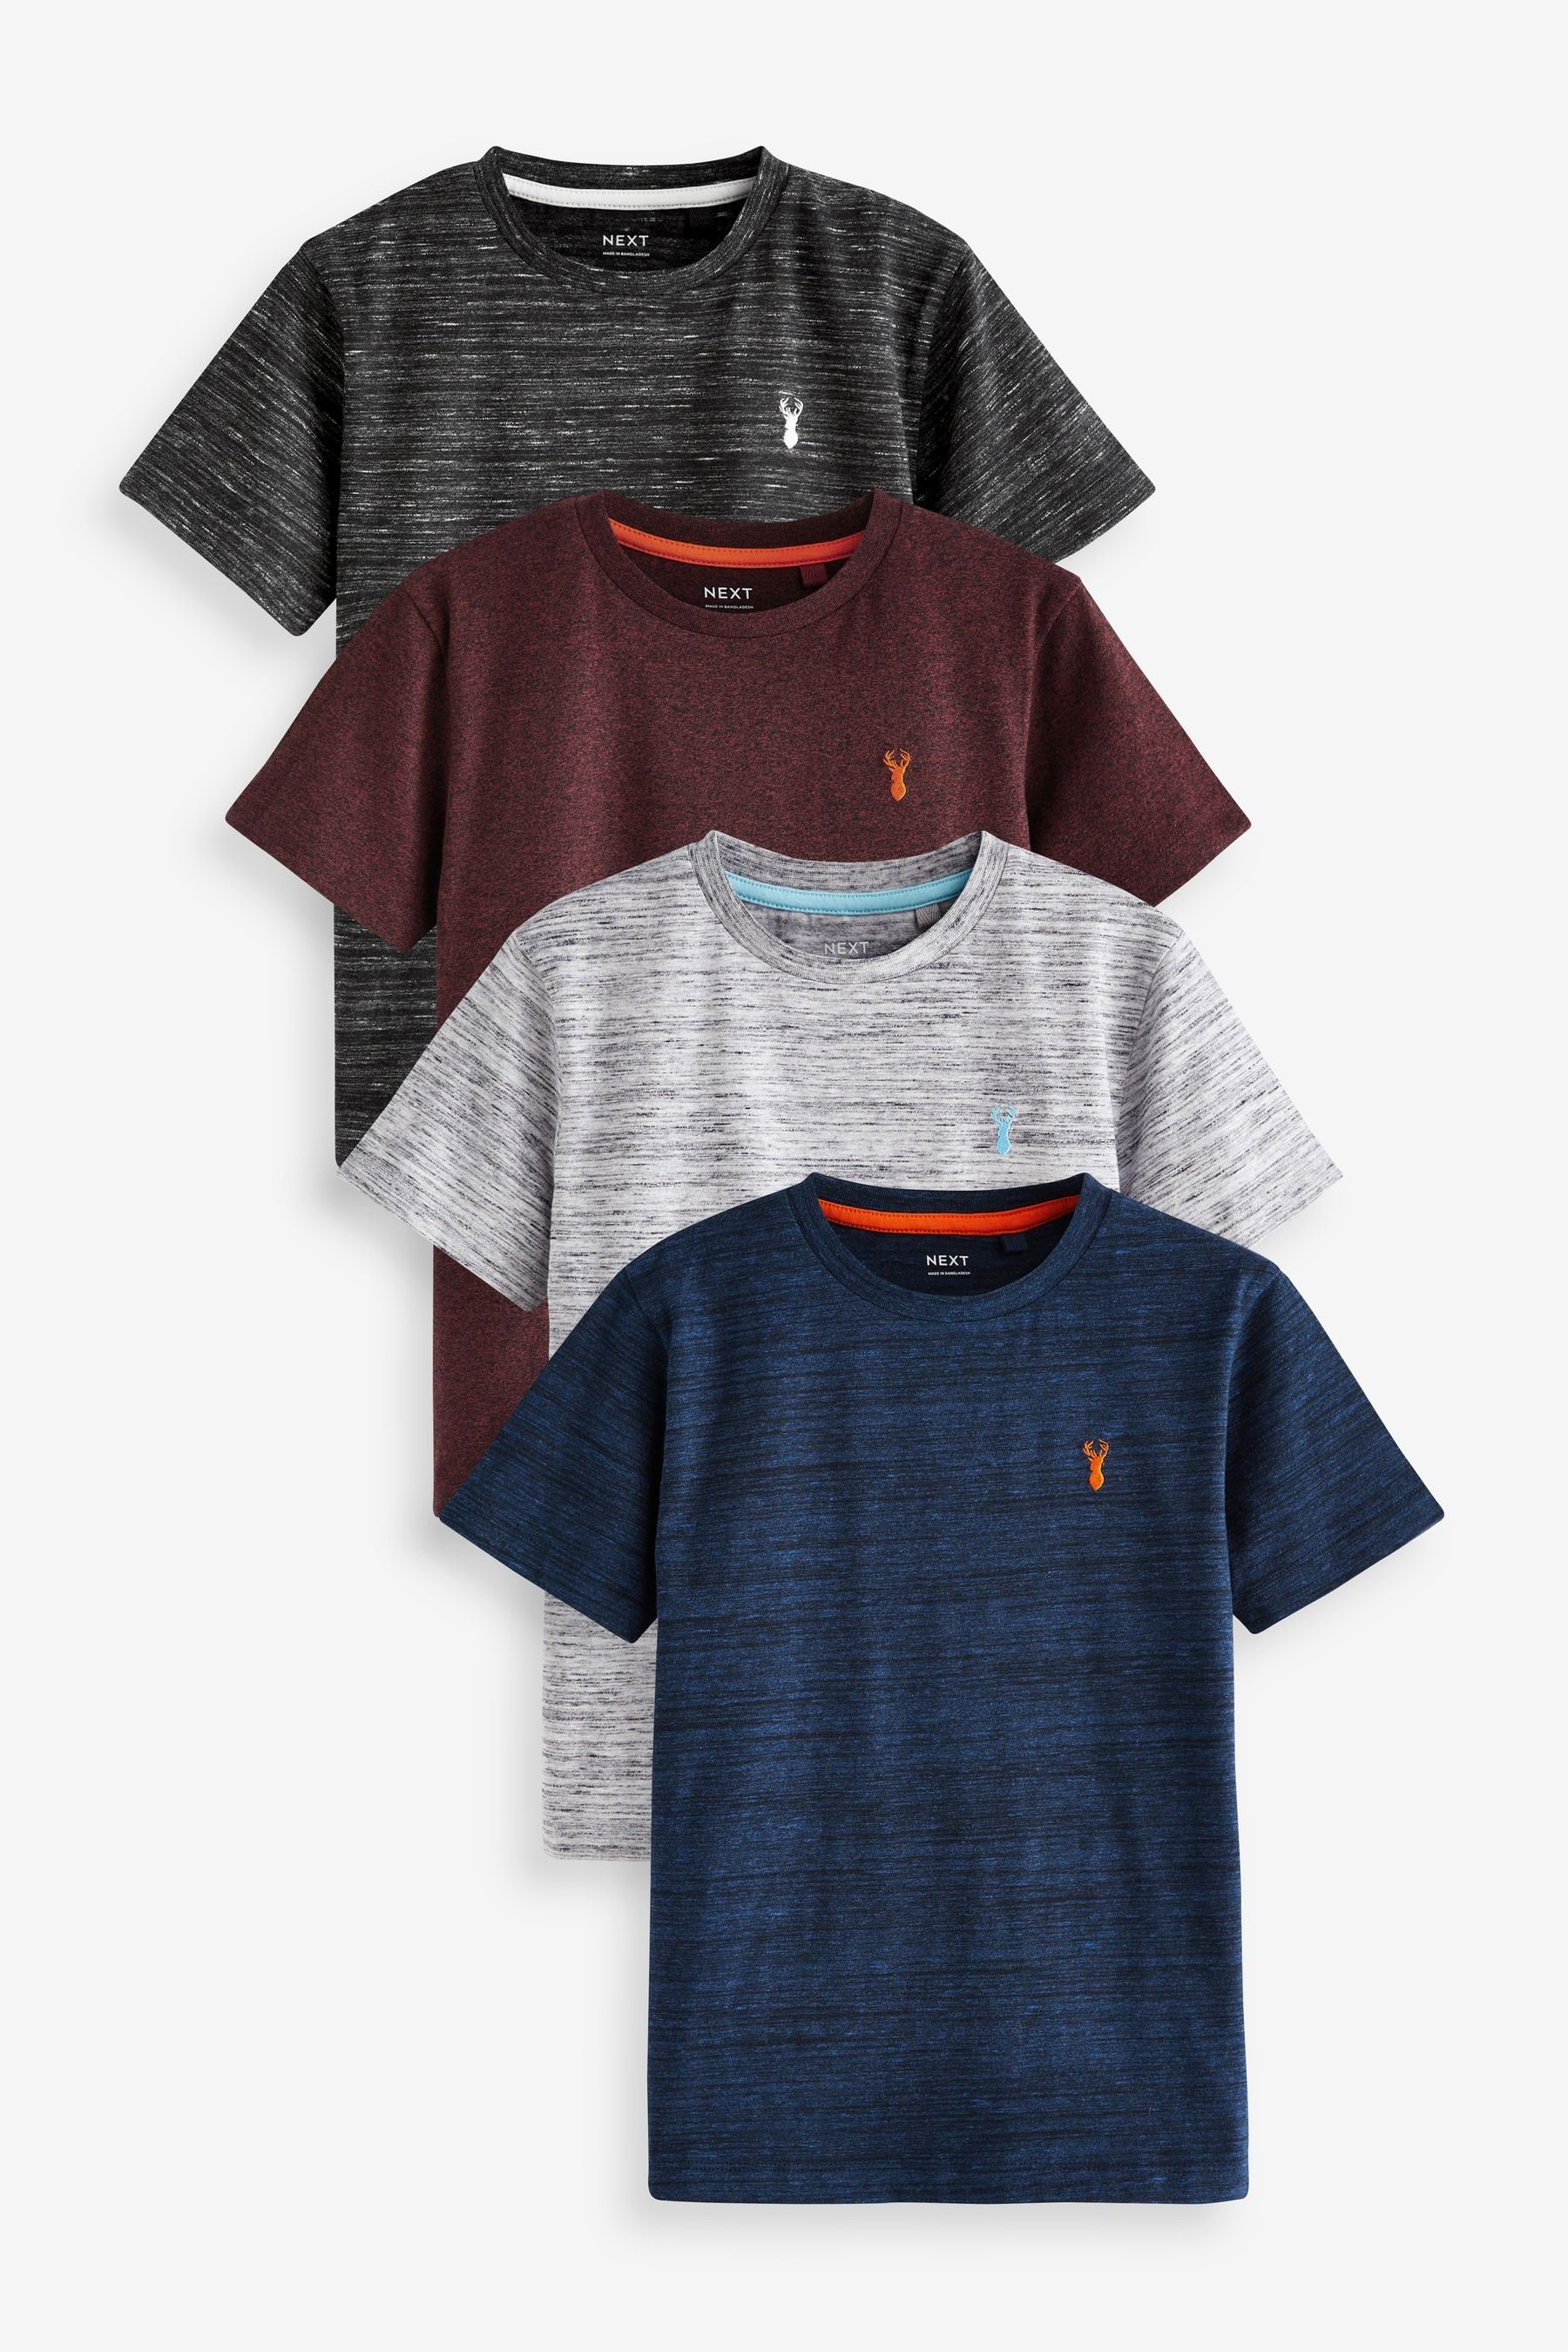 Next T-Shirt 4er-Pack Kurzarm-T-Shirts mit Hirsch-Stickerei (4-tlg) Black/Grey/Berry Red/Navy Blue Textured